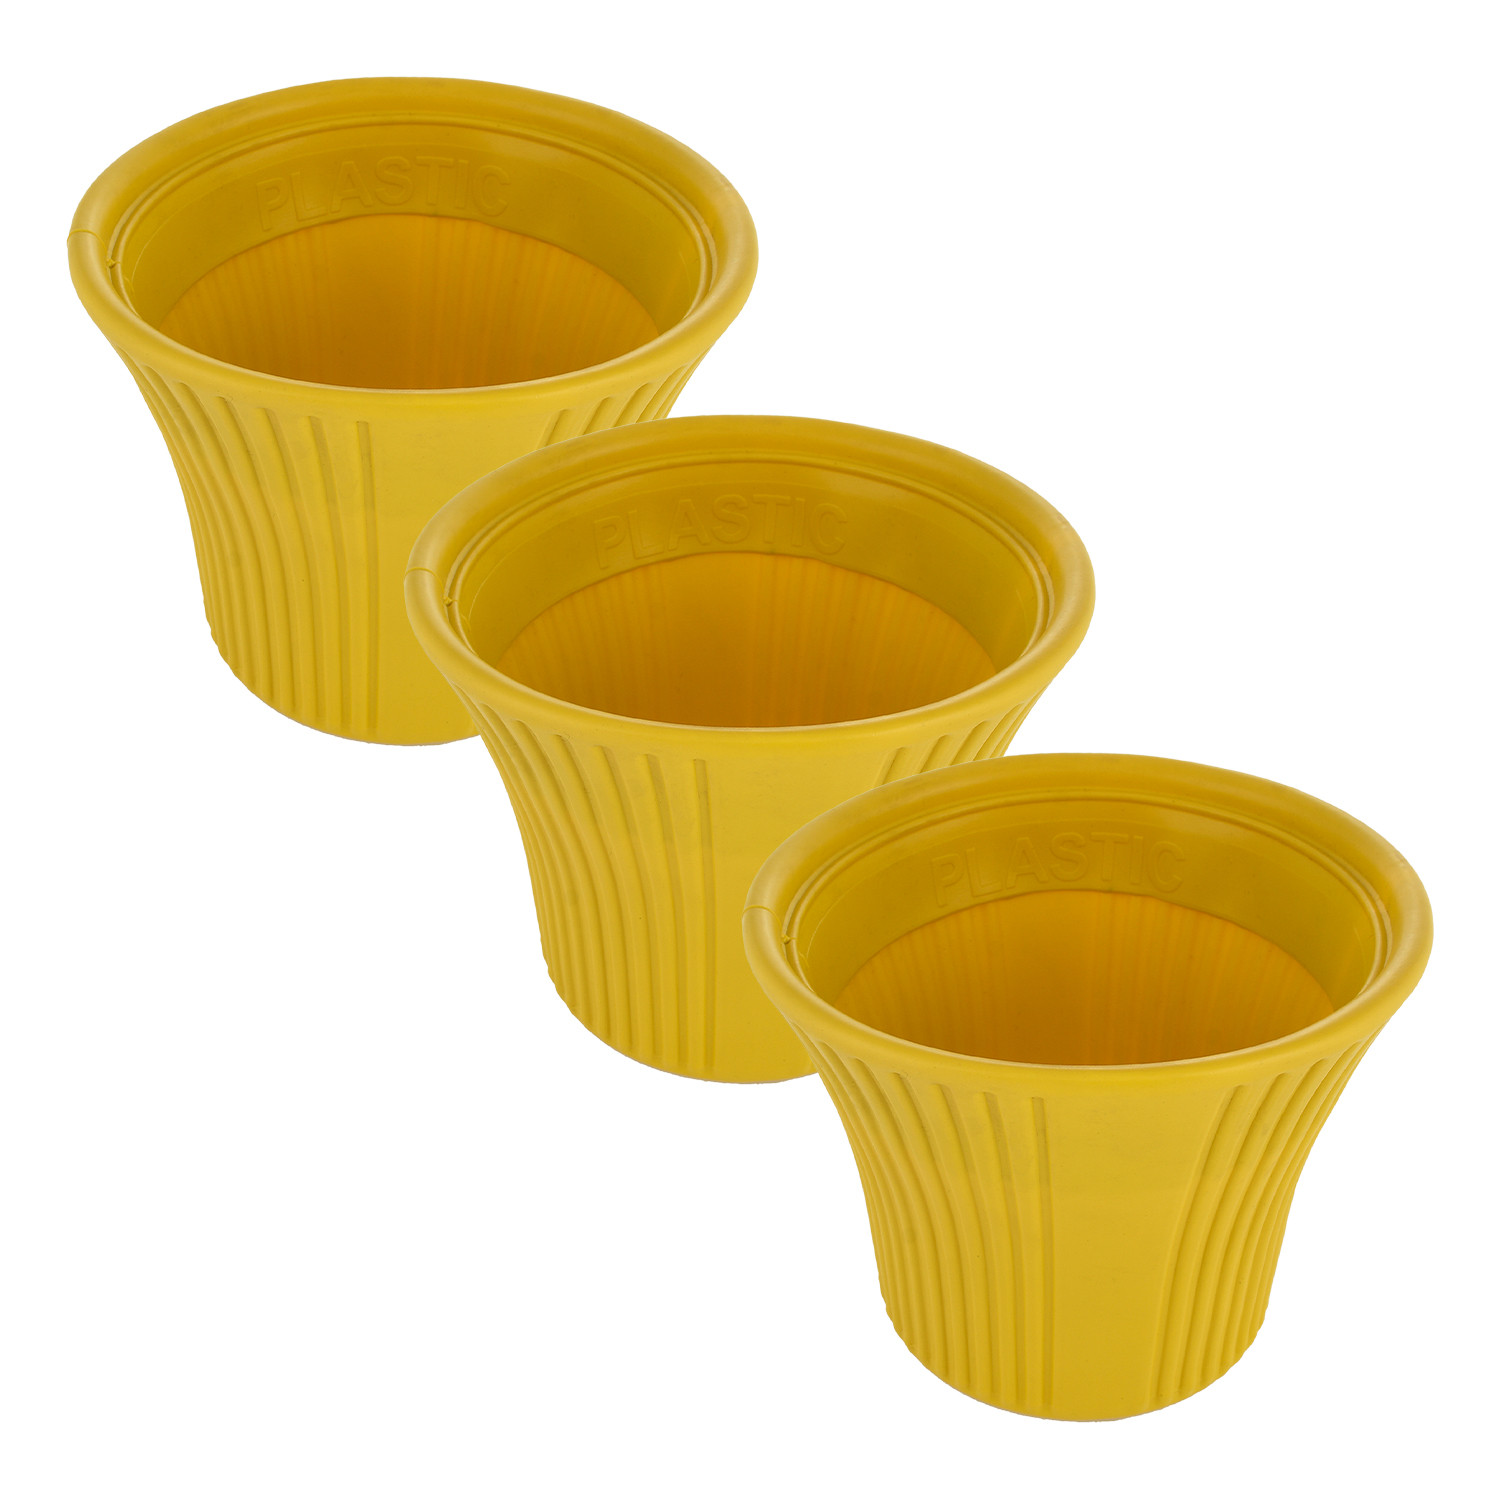 Kuber Industries Sunshine Flower Pot|Durable Plastic Flower Pots|Planters for Home Décor|Garden|Living Room|Balcony|8 Inch (Yellow)